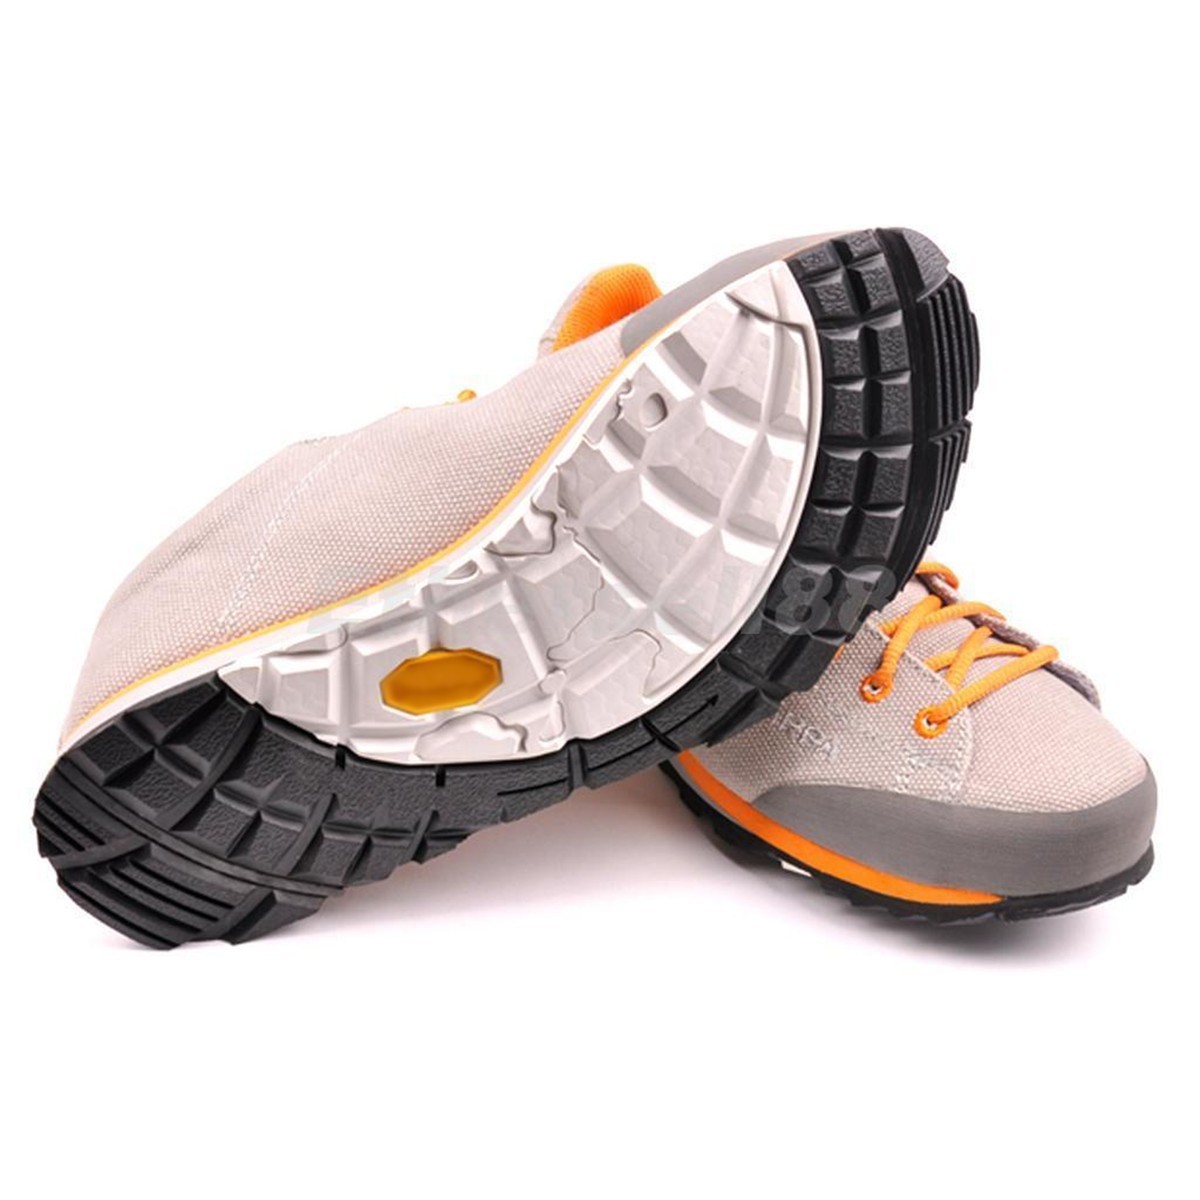 6mm-Thick-Footful-Rubber-Anti-Slip-Glue-on-Full-Soles-Shoe-Repair-Replace-1135835